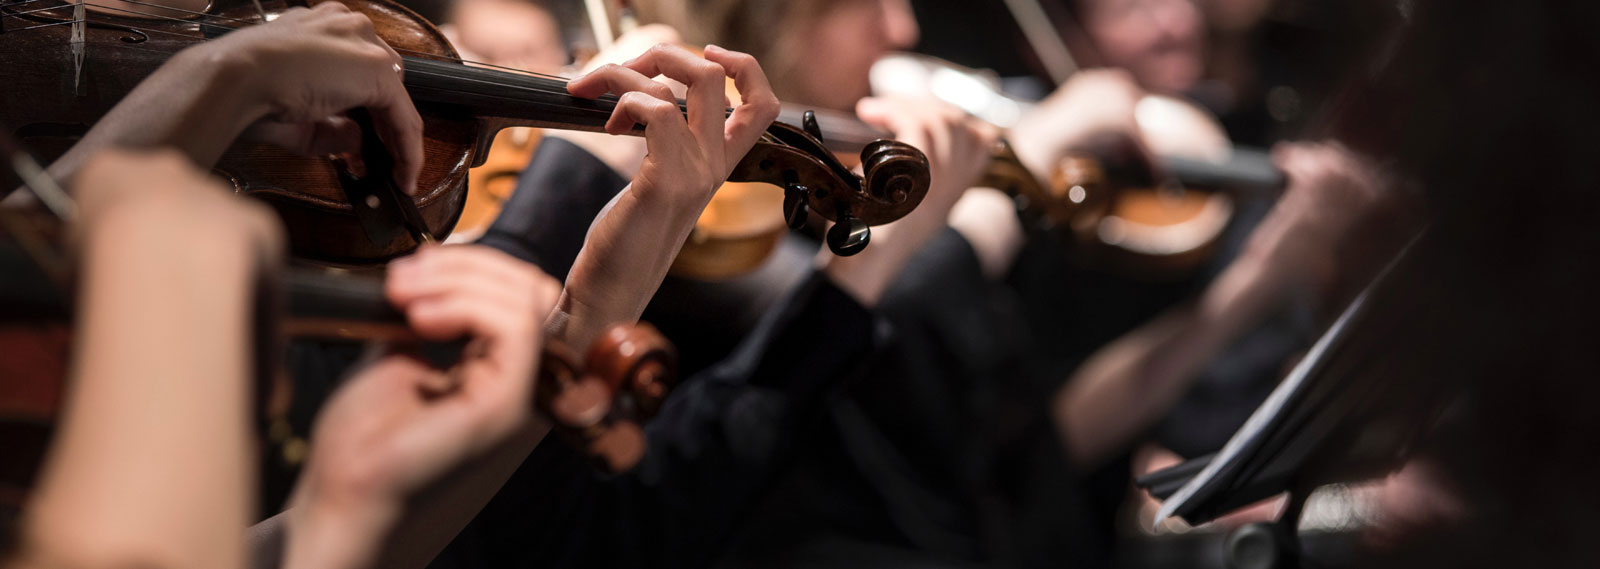 Close-up of a violin concerto